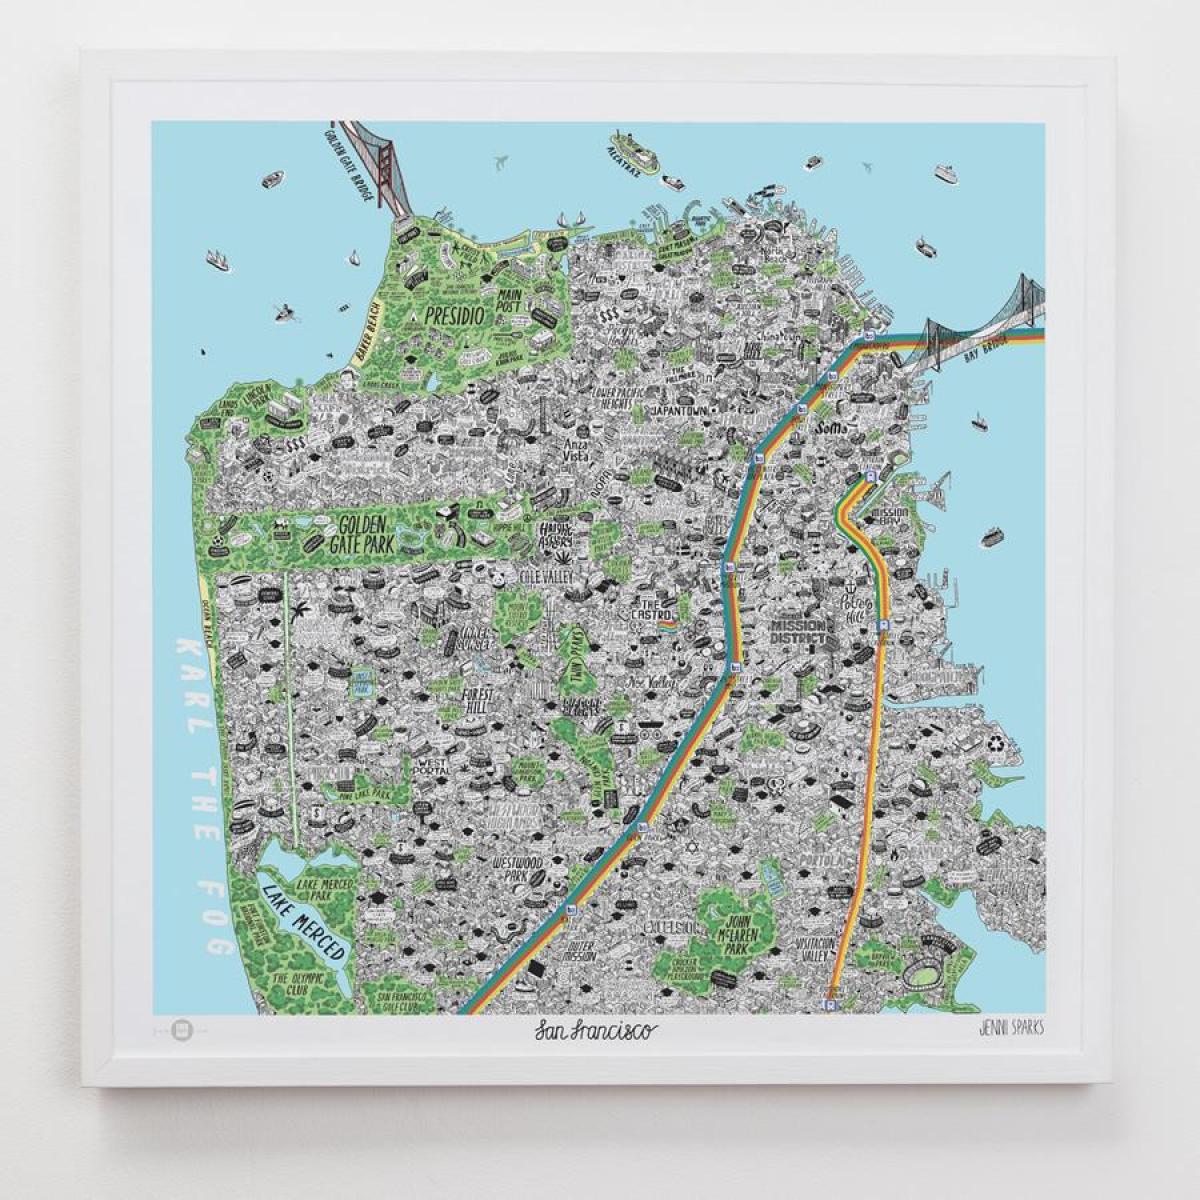 Mapu San Francisco umenie